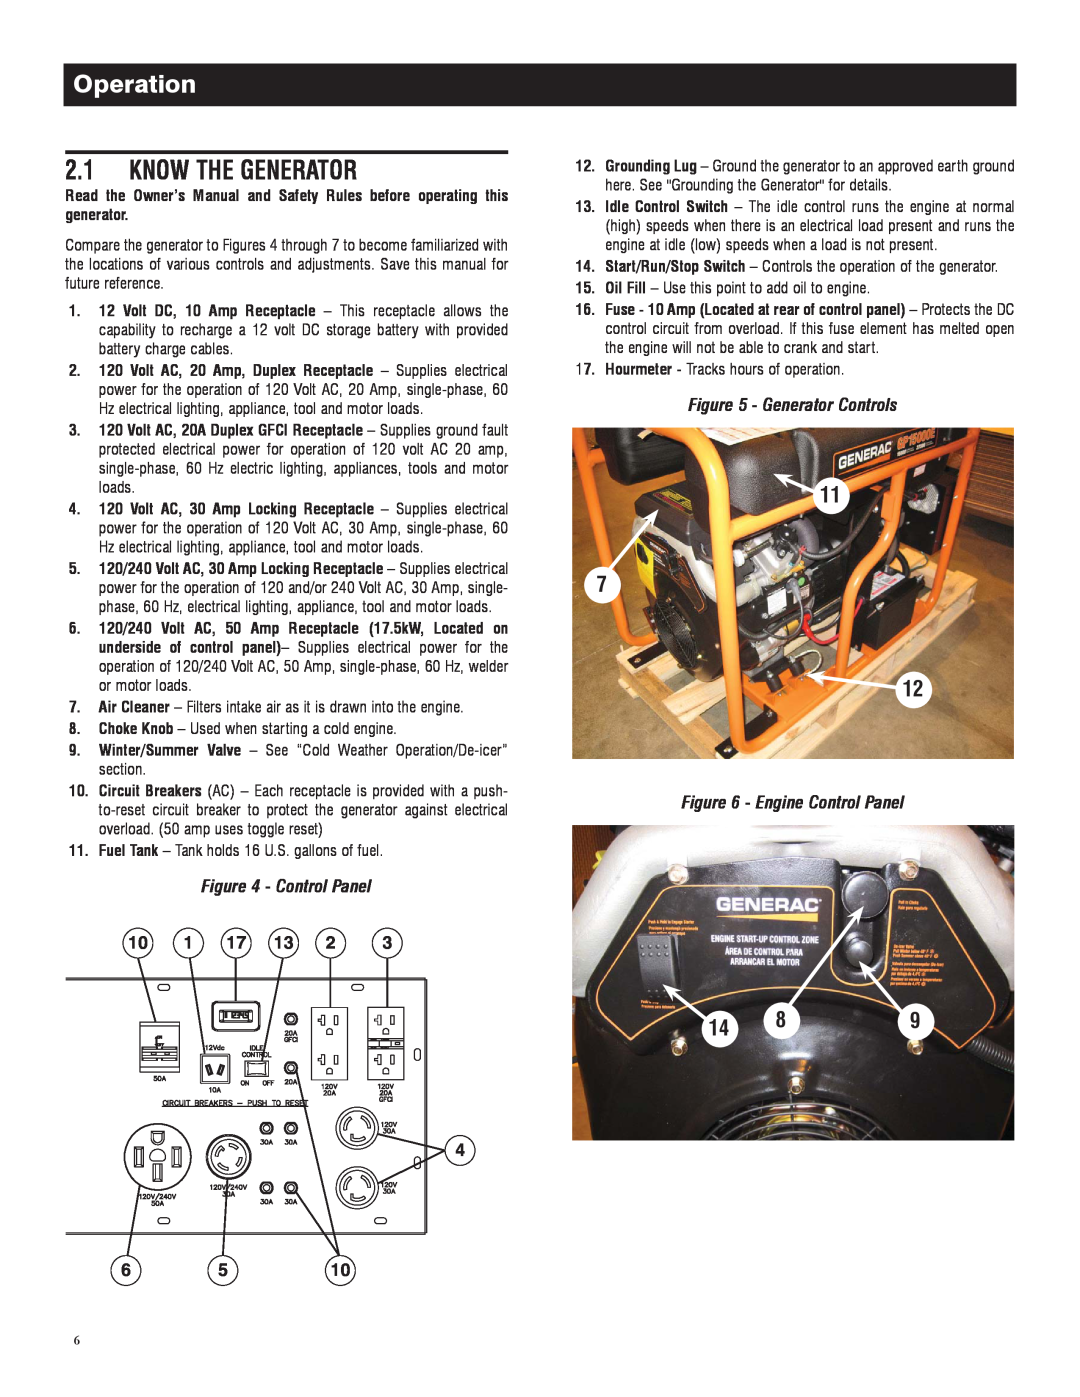 Generac 005734-0, 005735-0 owner manual Know The Generator, Operation, Generator Controls, Engine Control Panel 